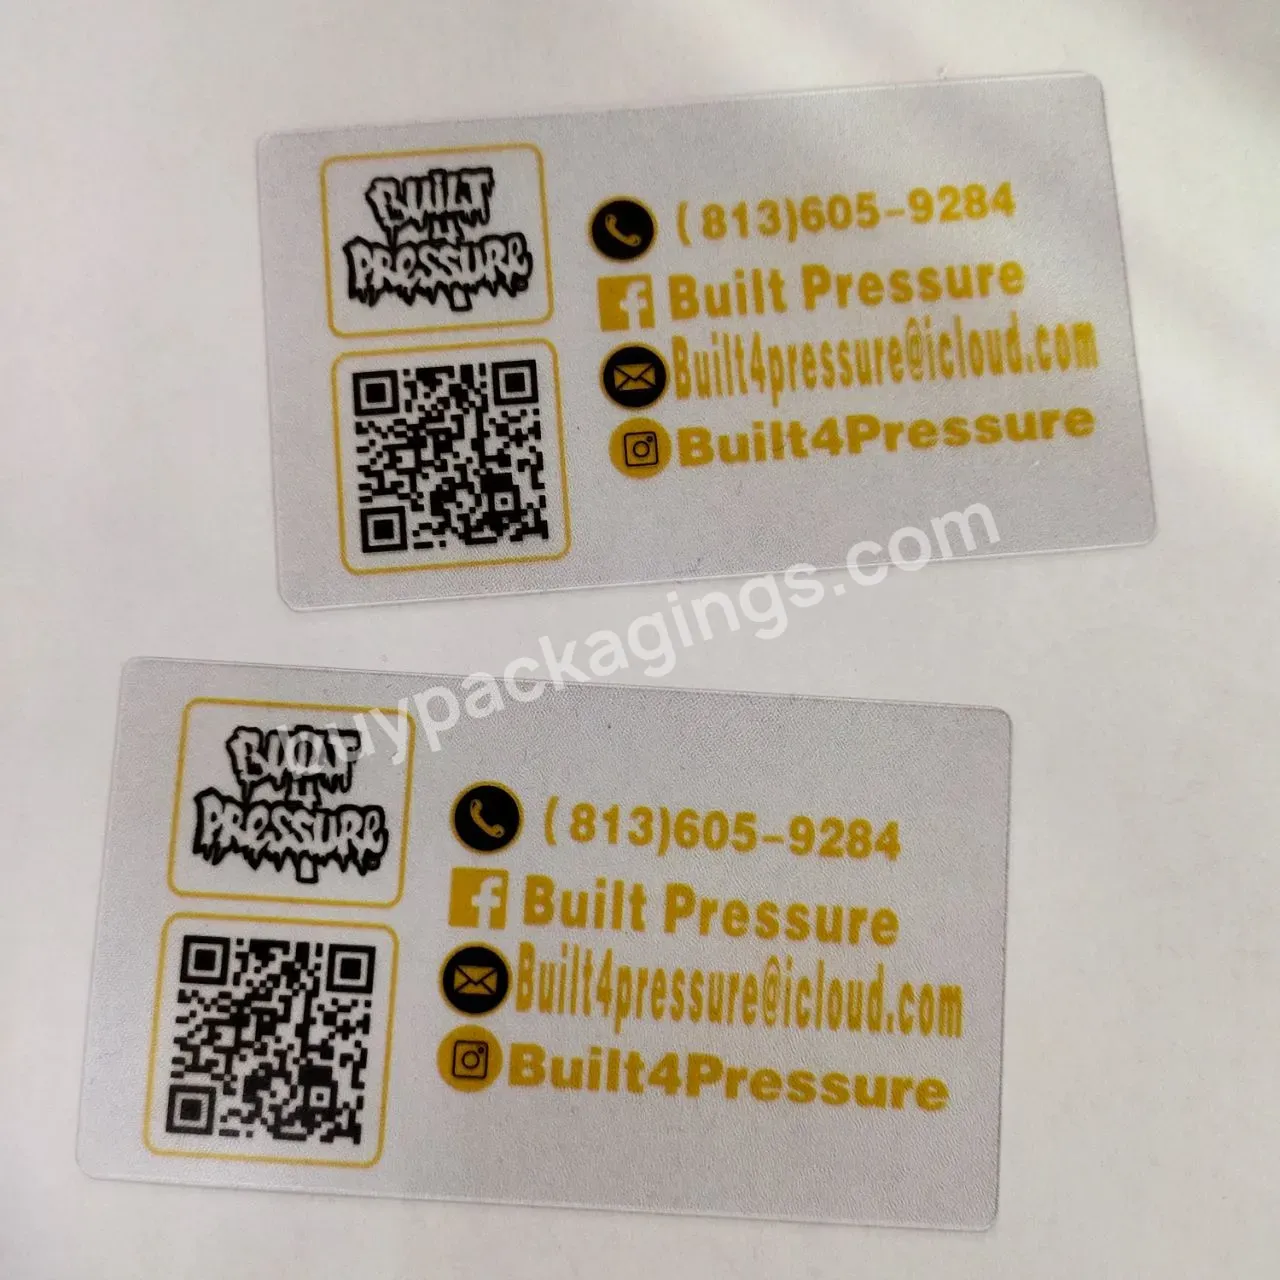 New Design Custom Plastic Pvc Card Printing Business Card With Social Media Transparent Coupon Card For Promotion - Buy Pvc Card,Transparent Coupon Card,Pvc Plastic Card.